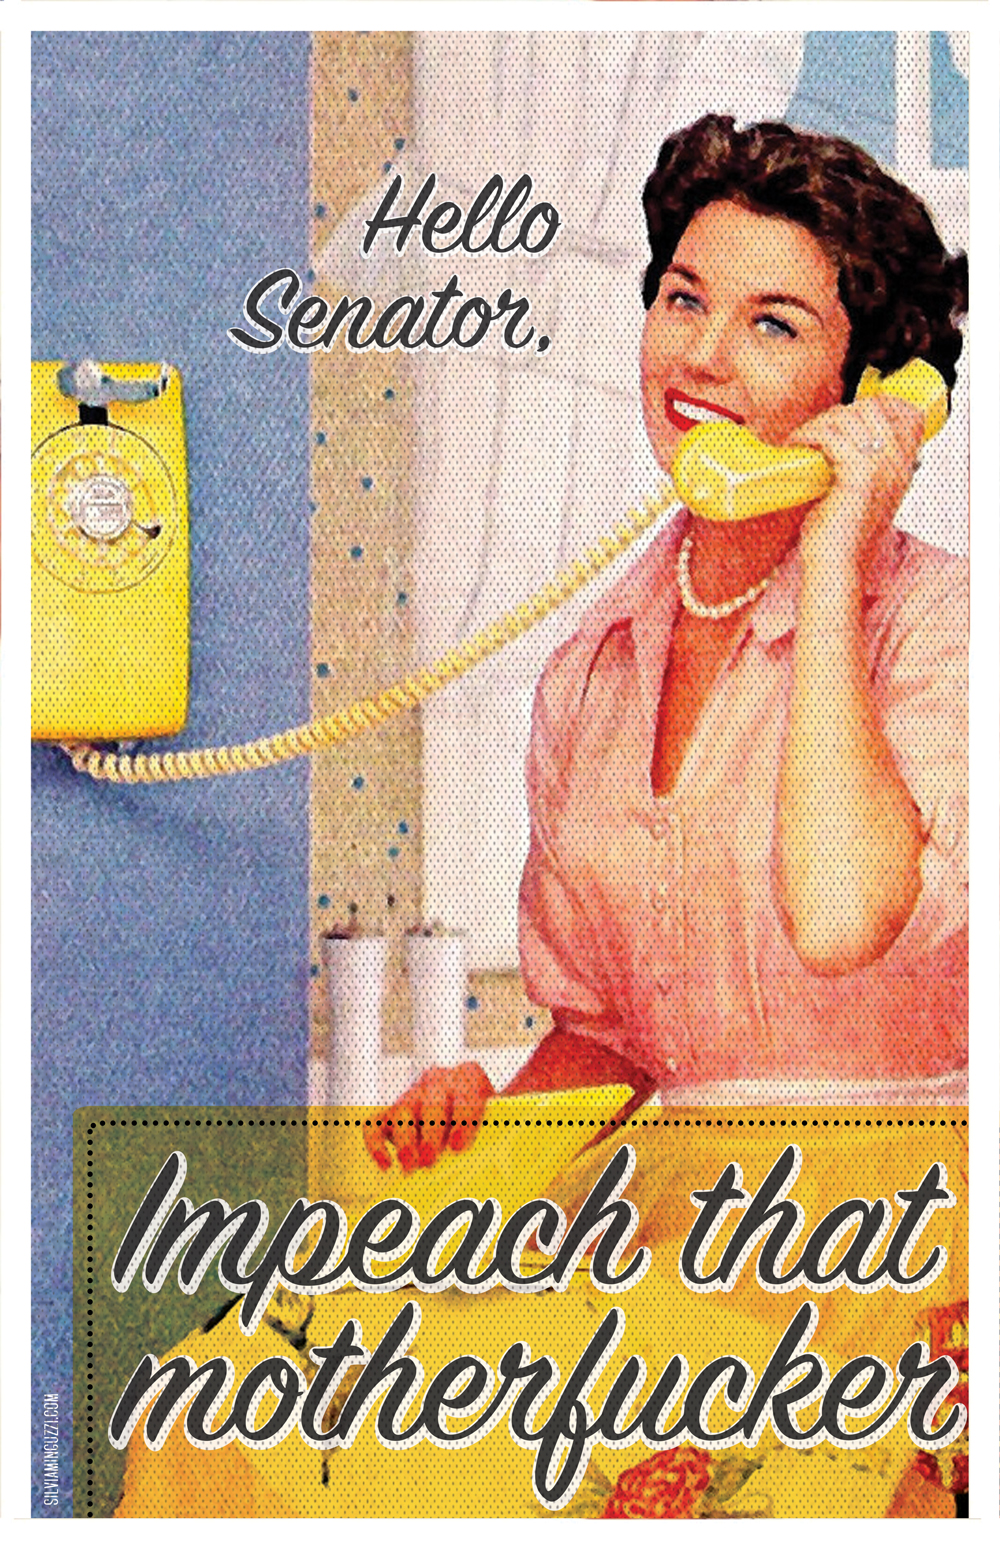 Call your Senator